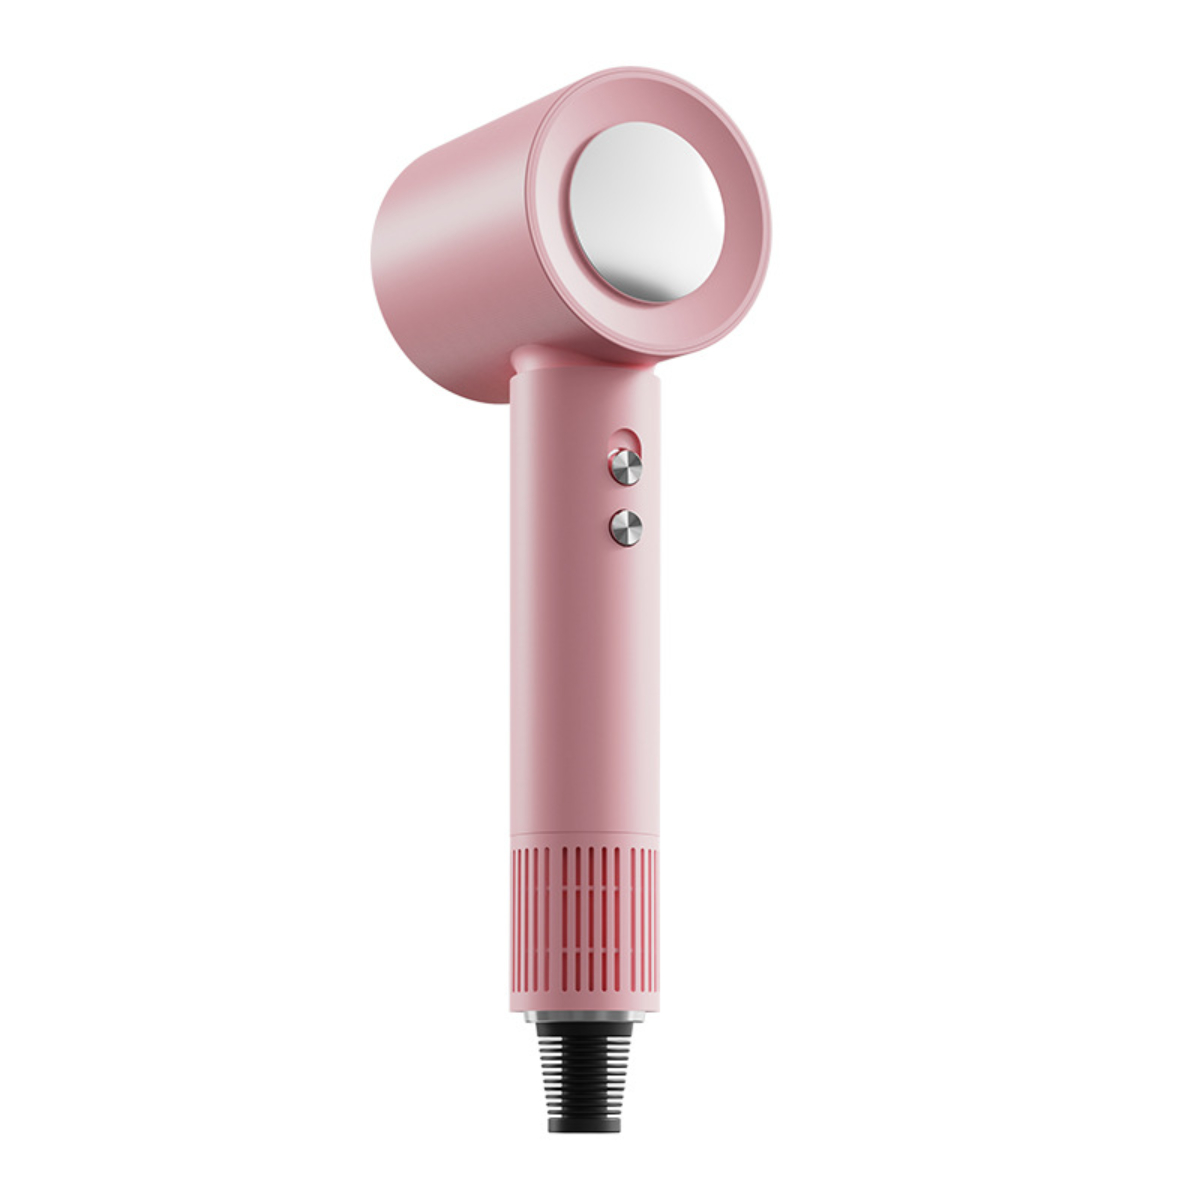 Hochgeschwindigkeits-Haartrockner Pinker rosa intelligente (1600 Watt) - Haartrockner Leichter Temperaturregelung Griff, BYTELIKE